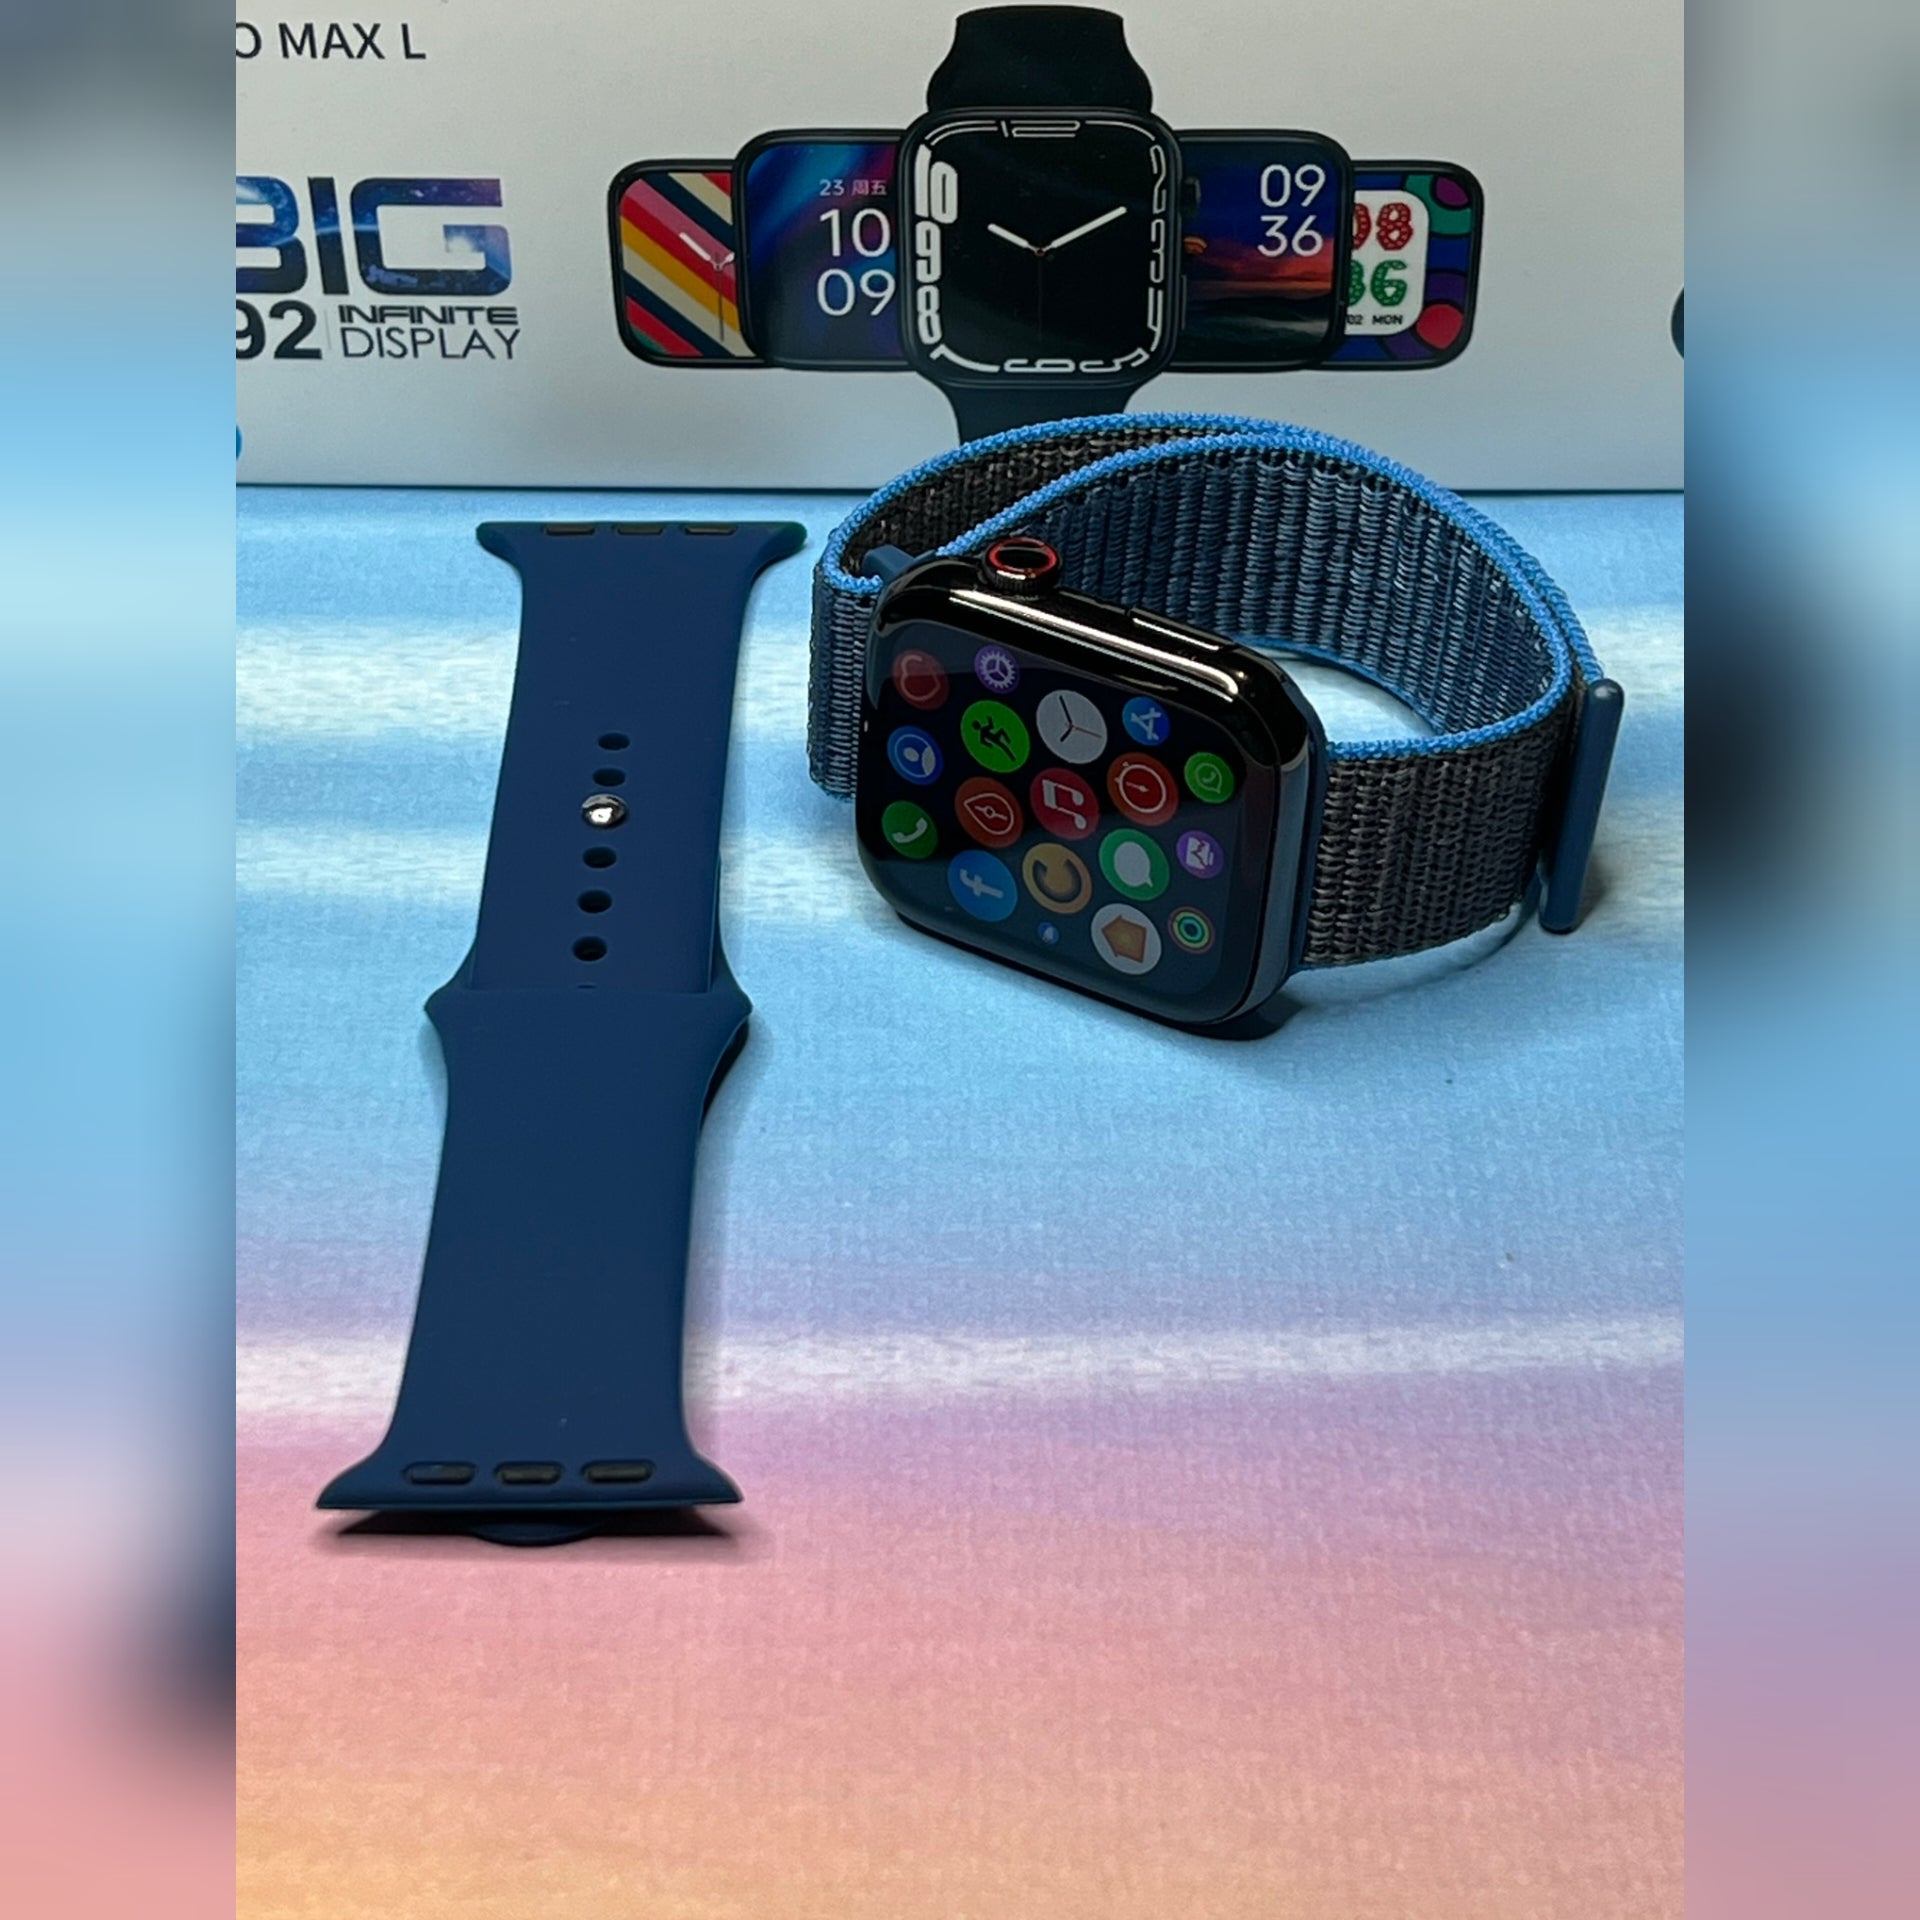 t900 pro max s smartwatch series